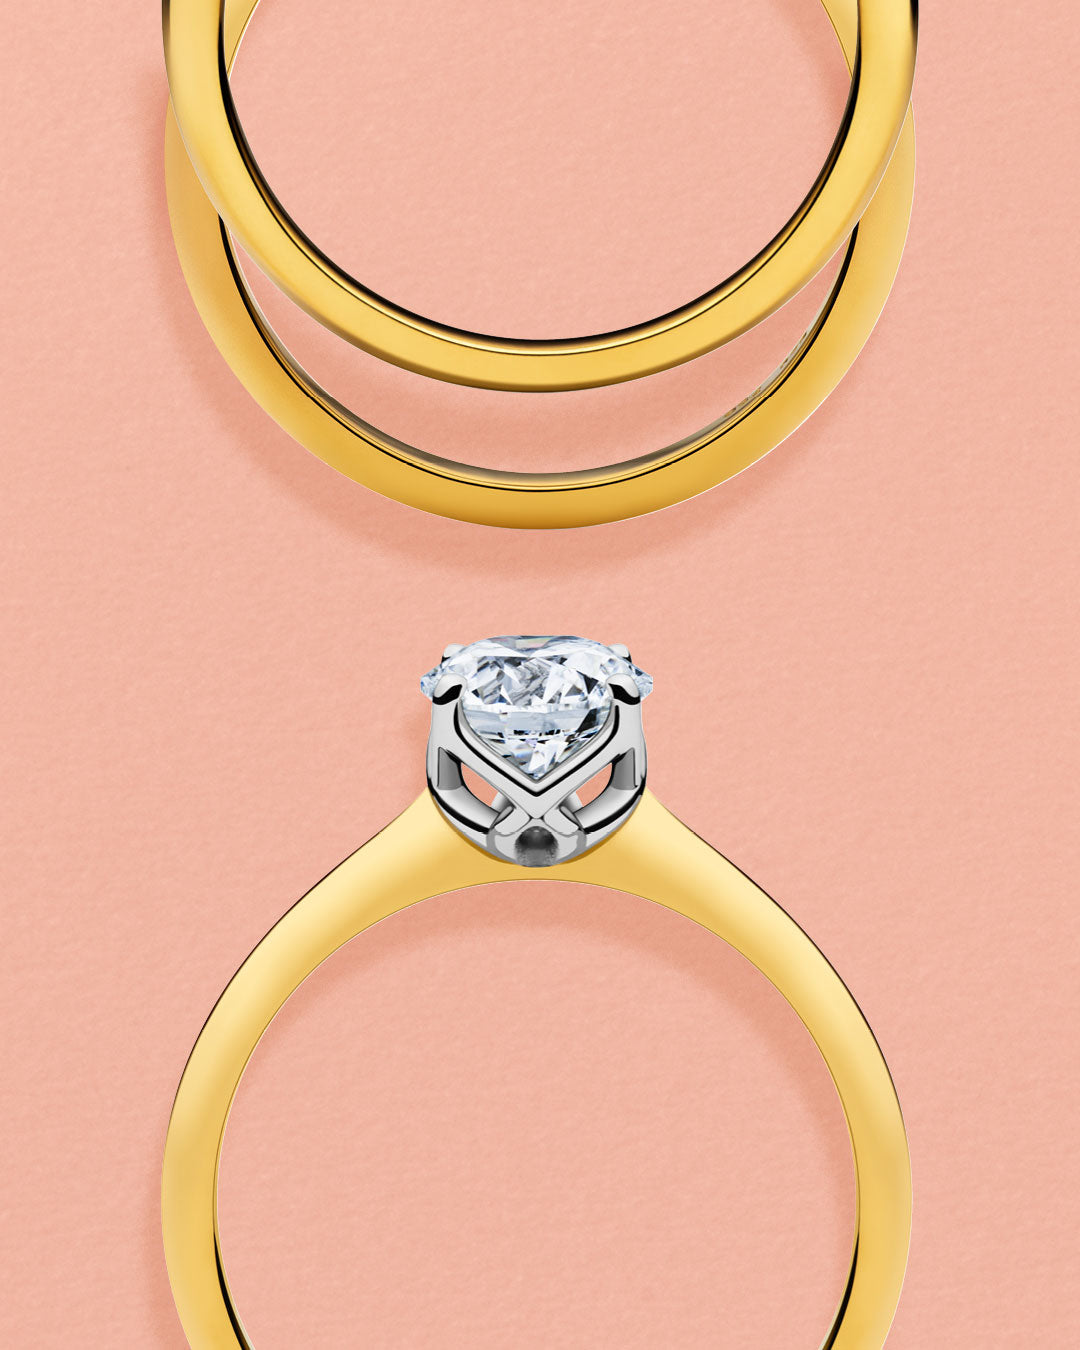 Bespoke Diamond Rings